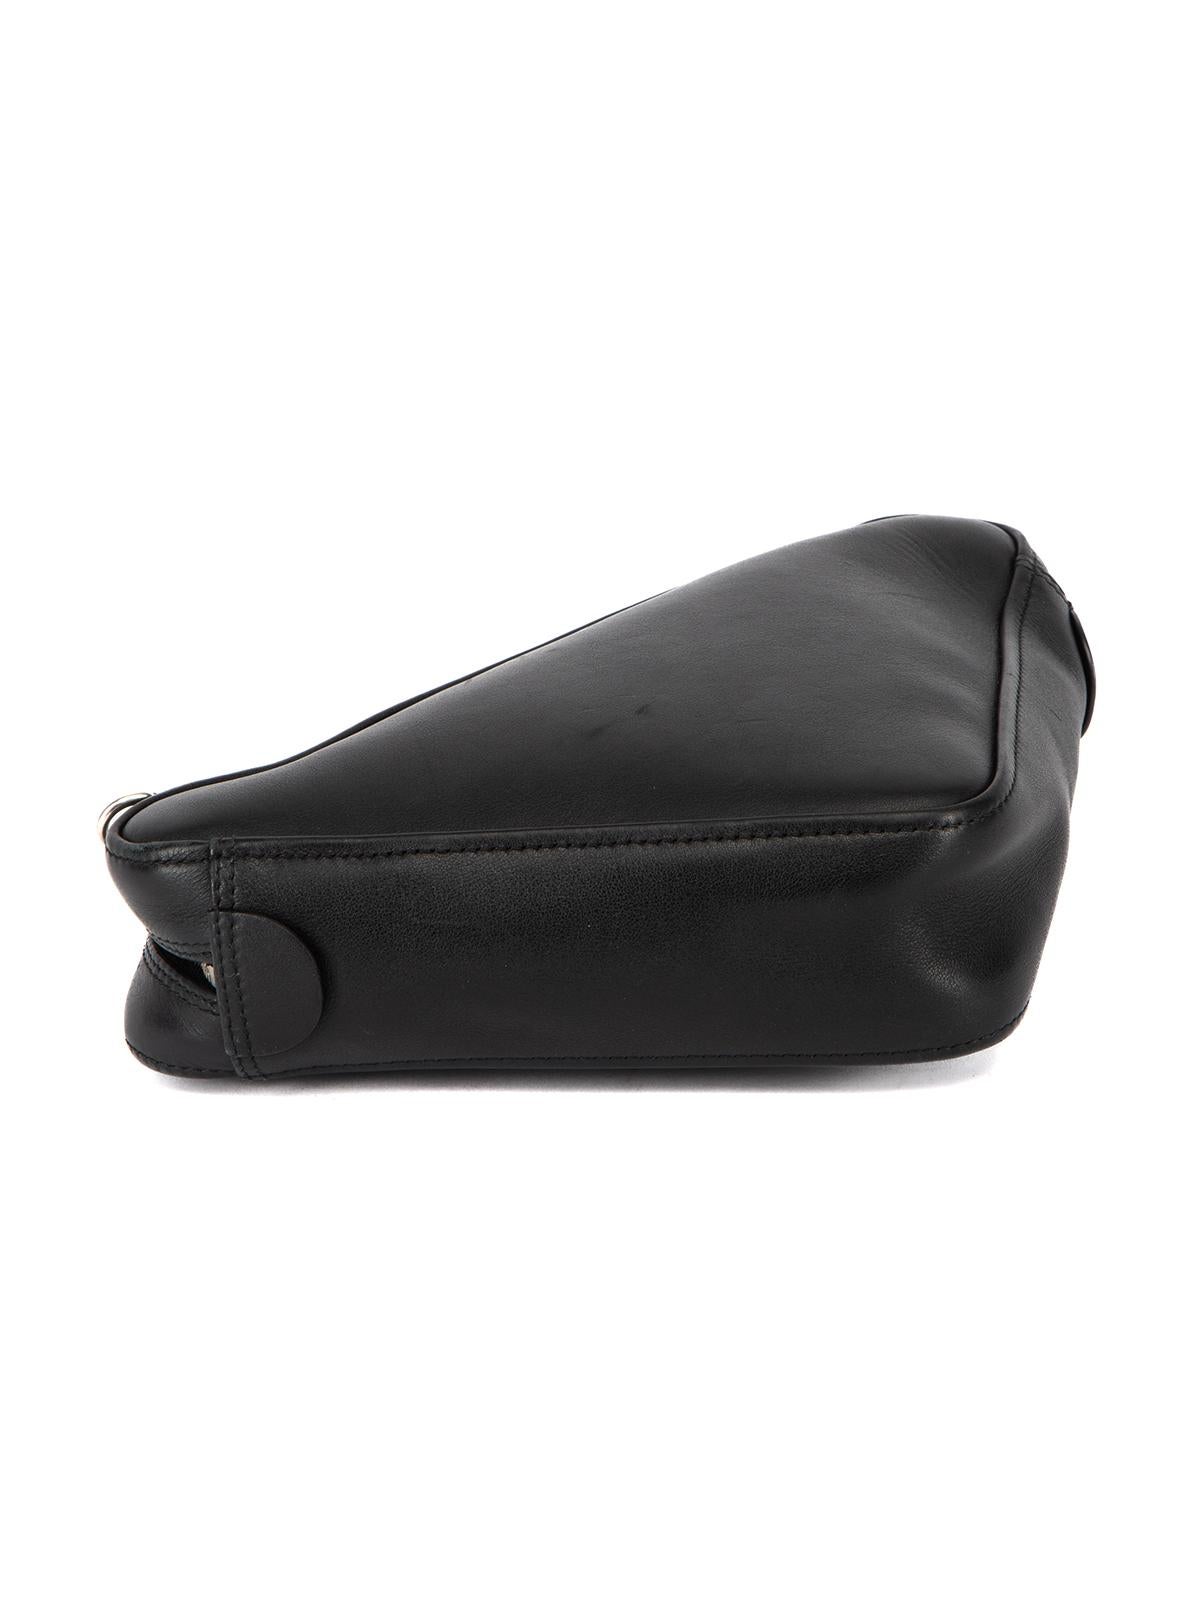 Balenciaga Women's Black Leather Triangle Crossbody Bag 2